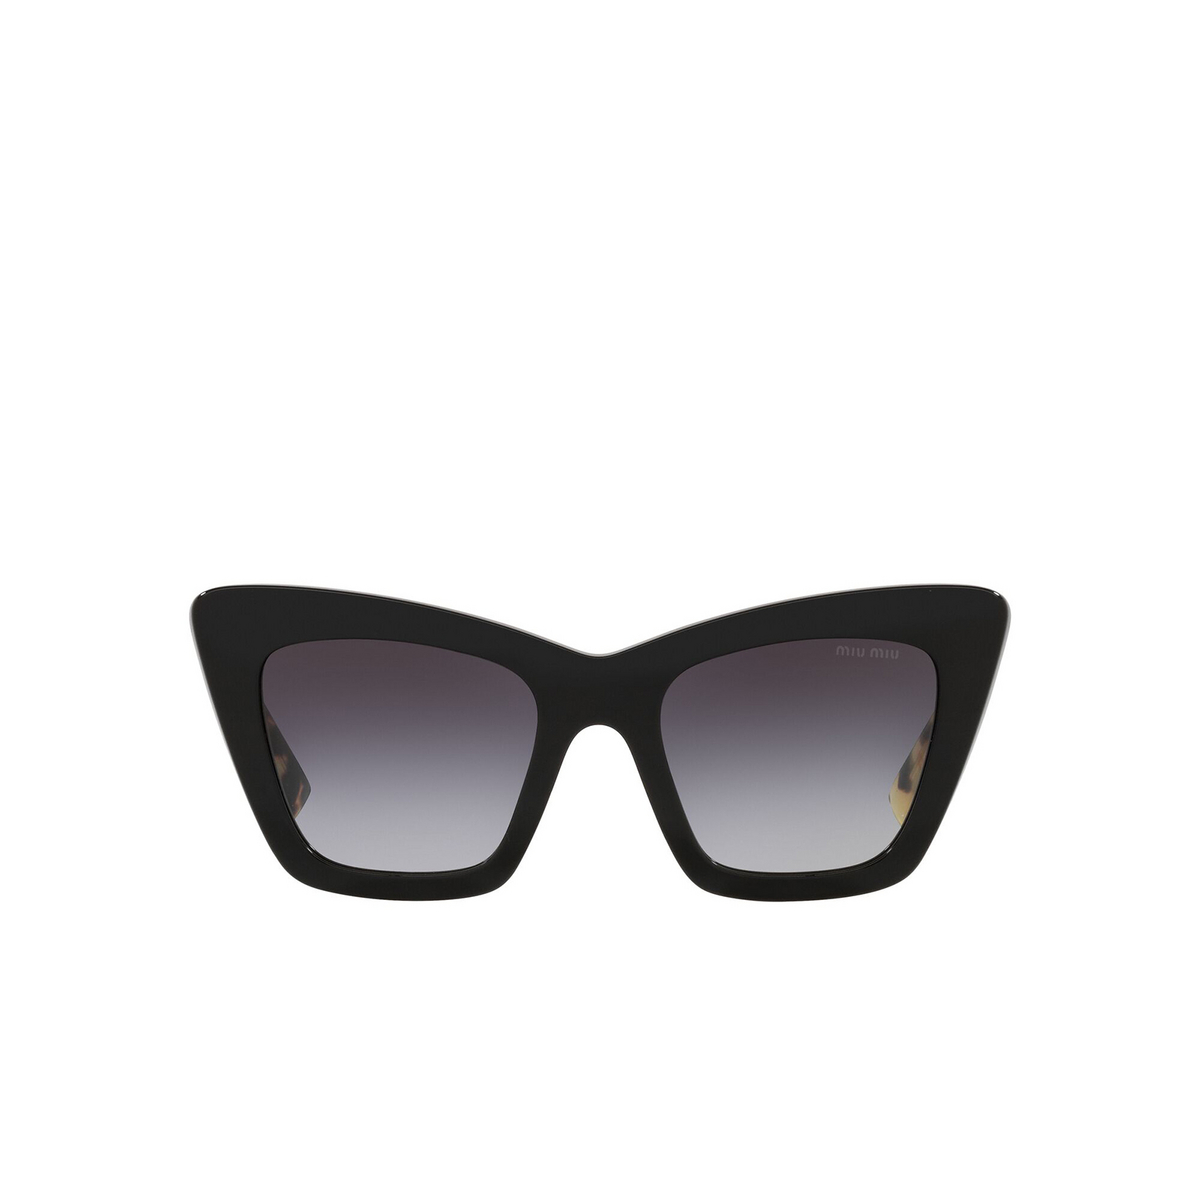 Miu Miu® Cat-eye Sunglasses: MU 01WS color Black 1AB5D1 - front view.